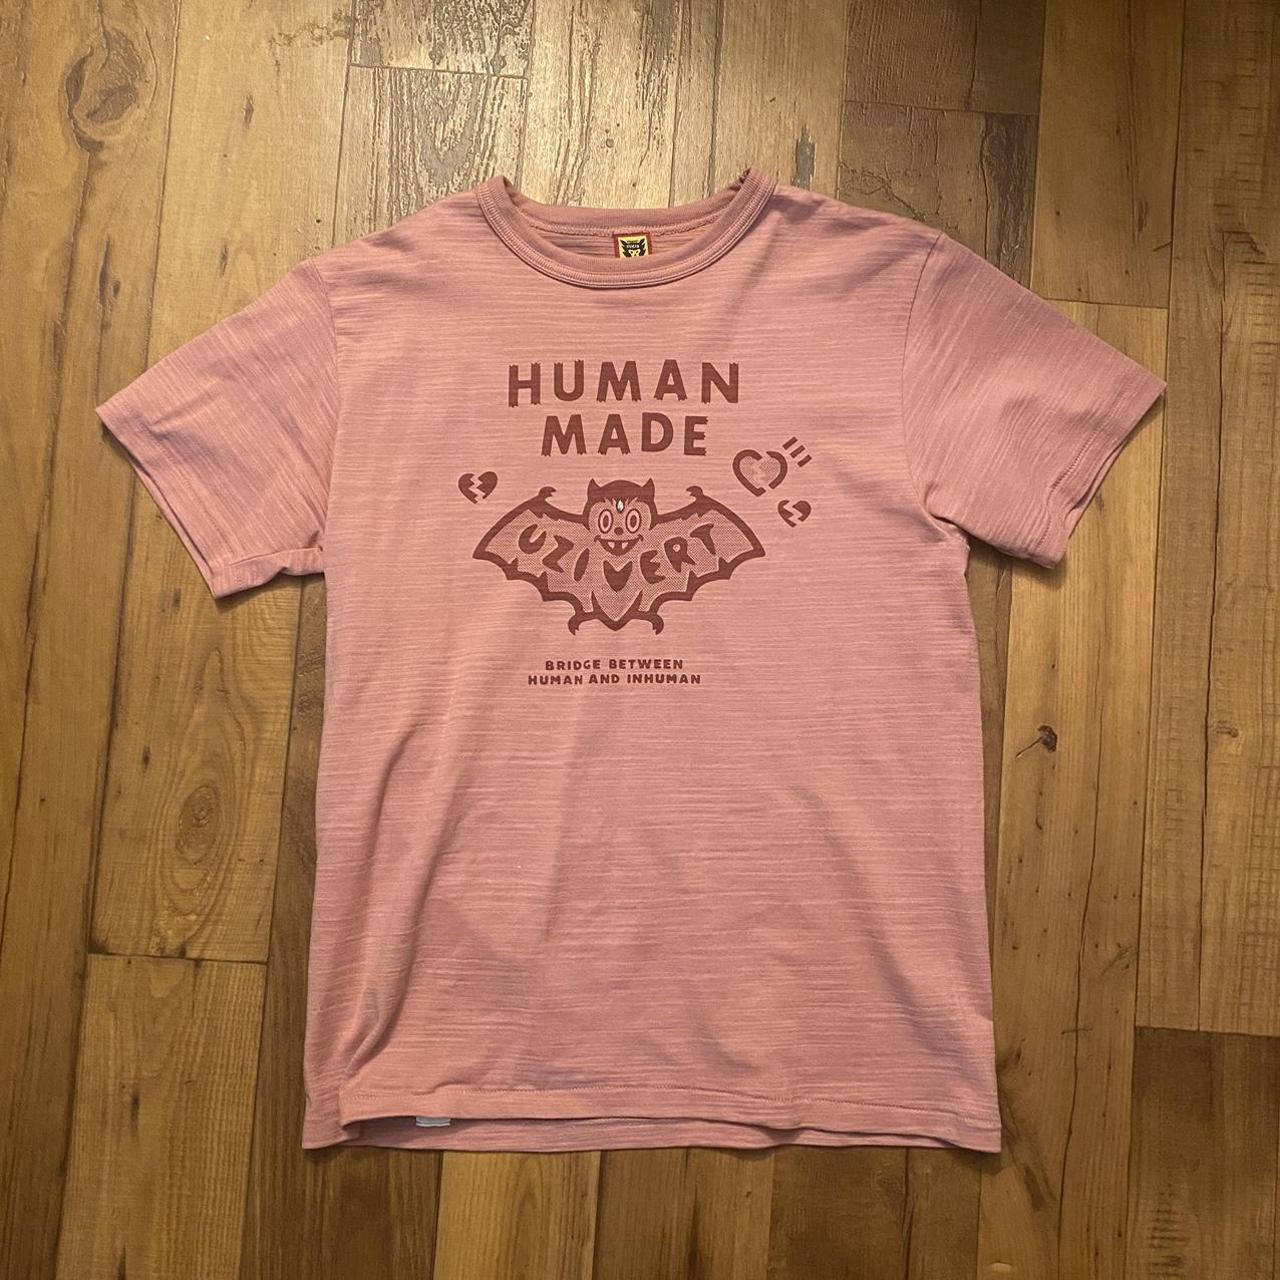 Human Made Men's Pink T-shirt